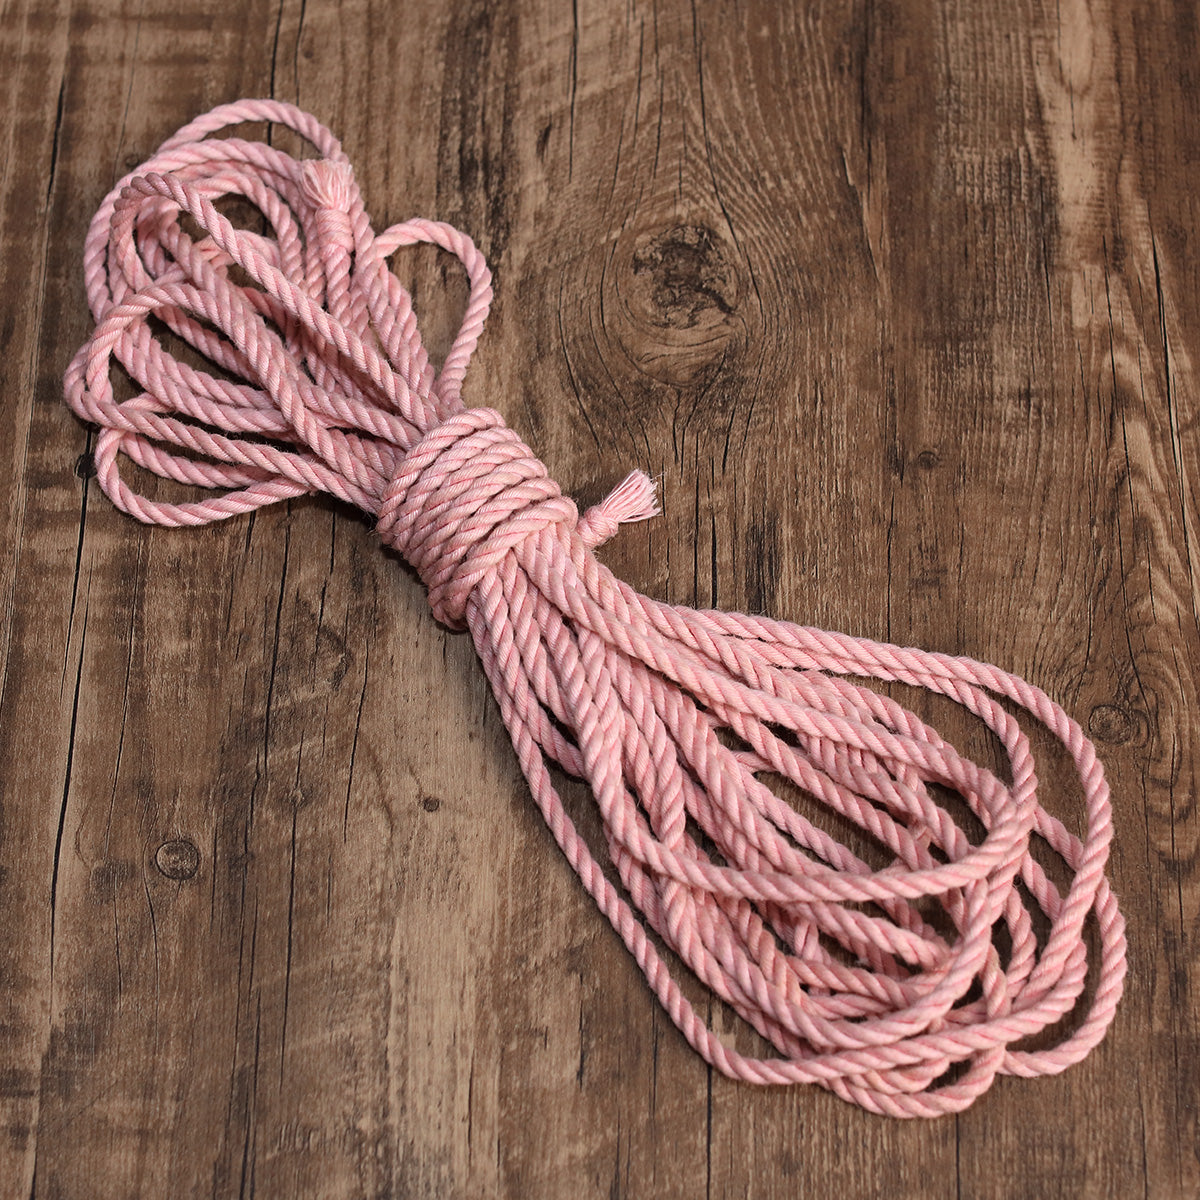 Cherry Pink Natural Jute Shibari Bondage Rope